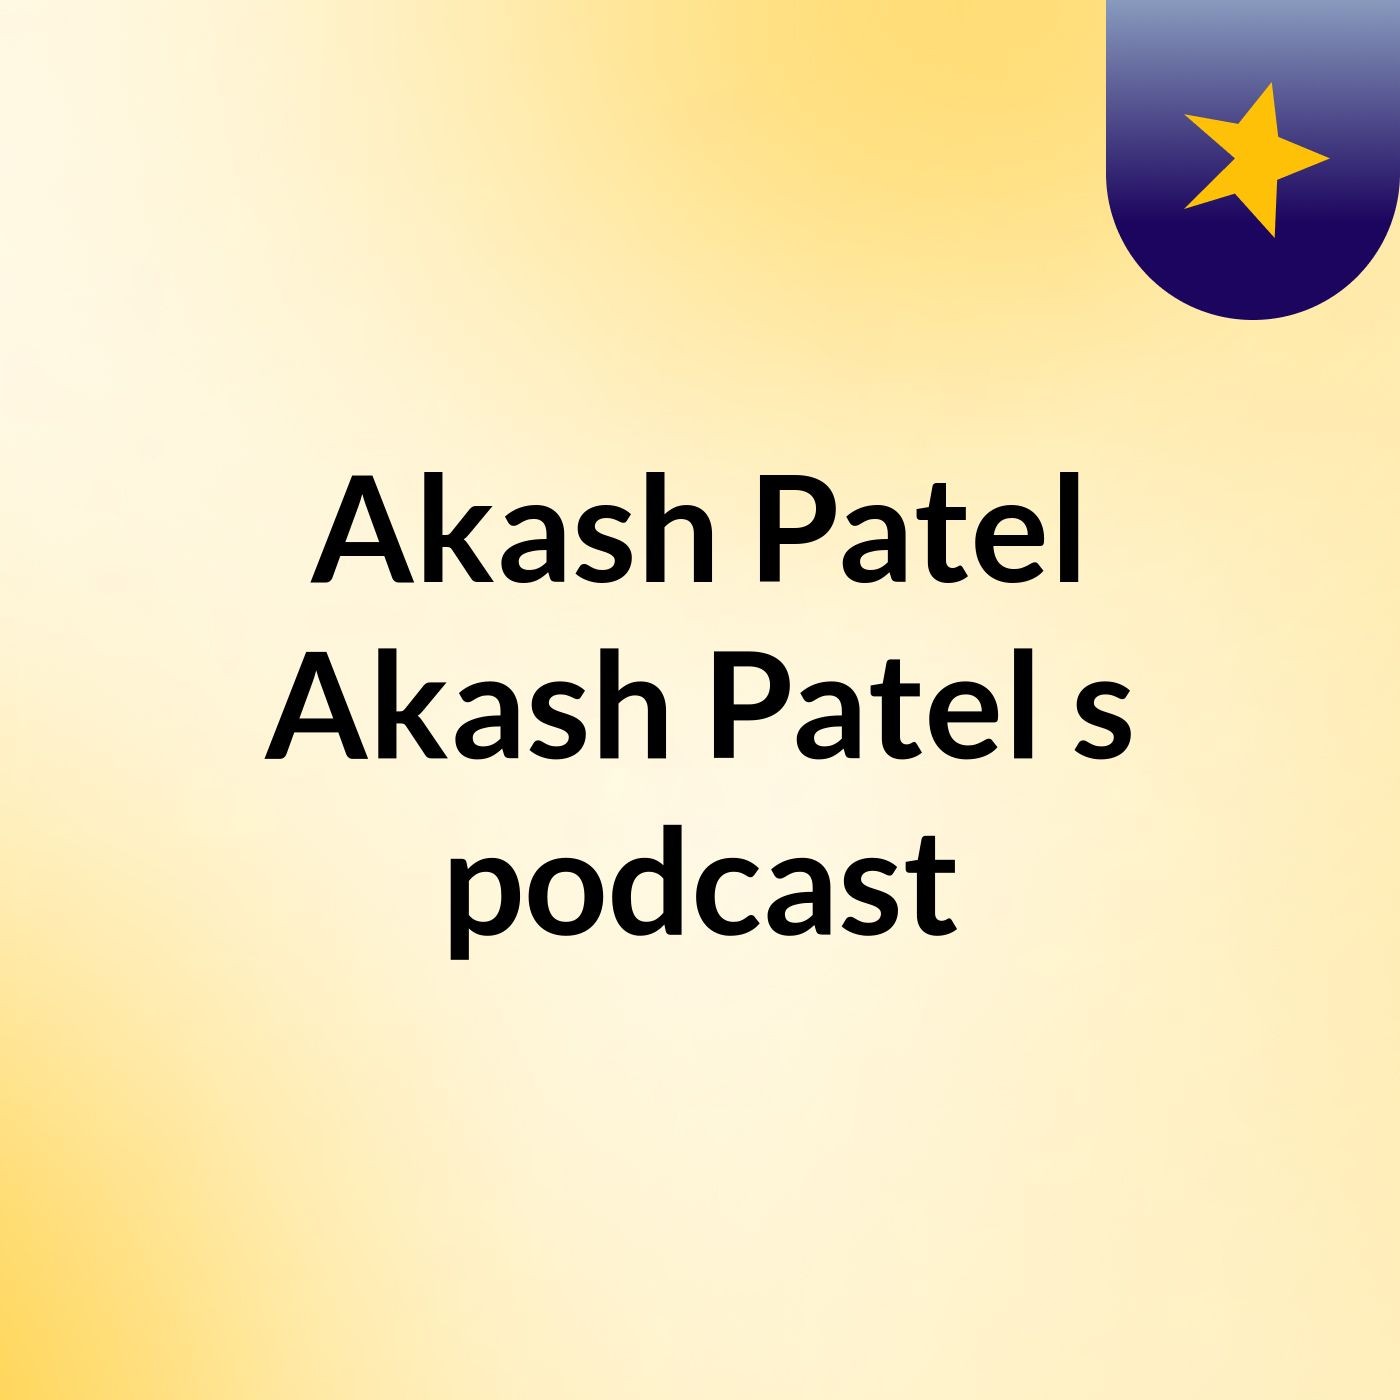 Episode 2 - Akash Patel Akash Patel's podcast